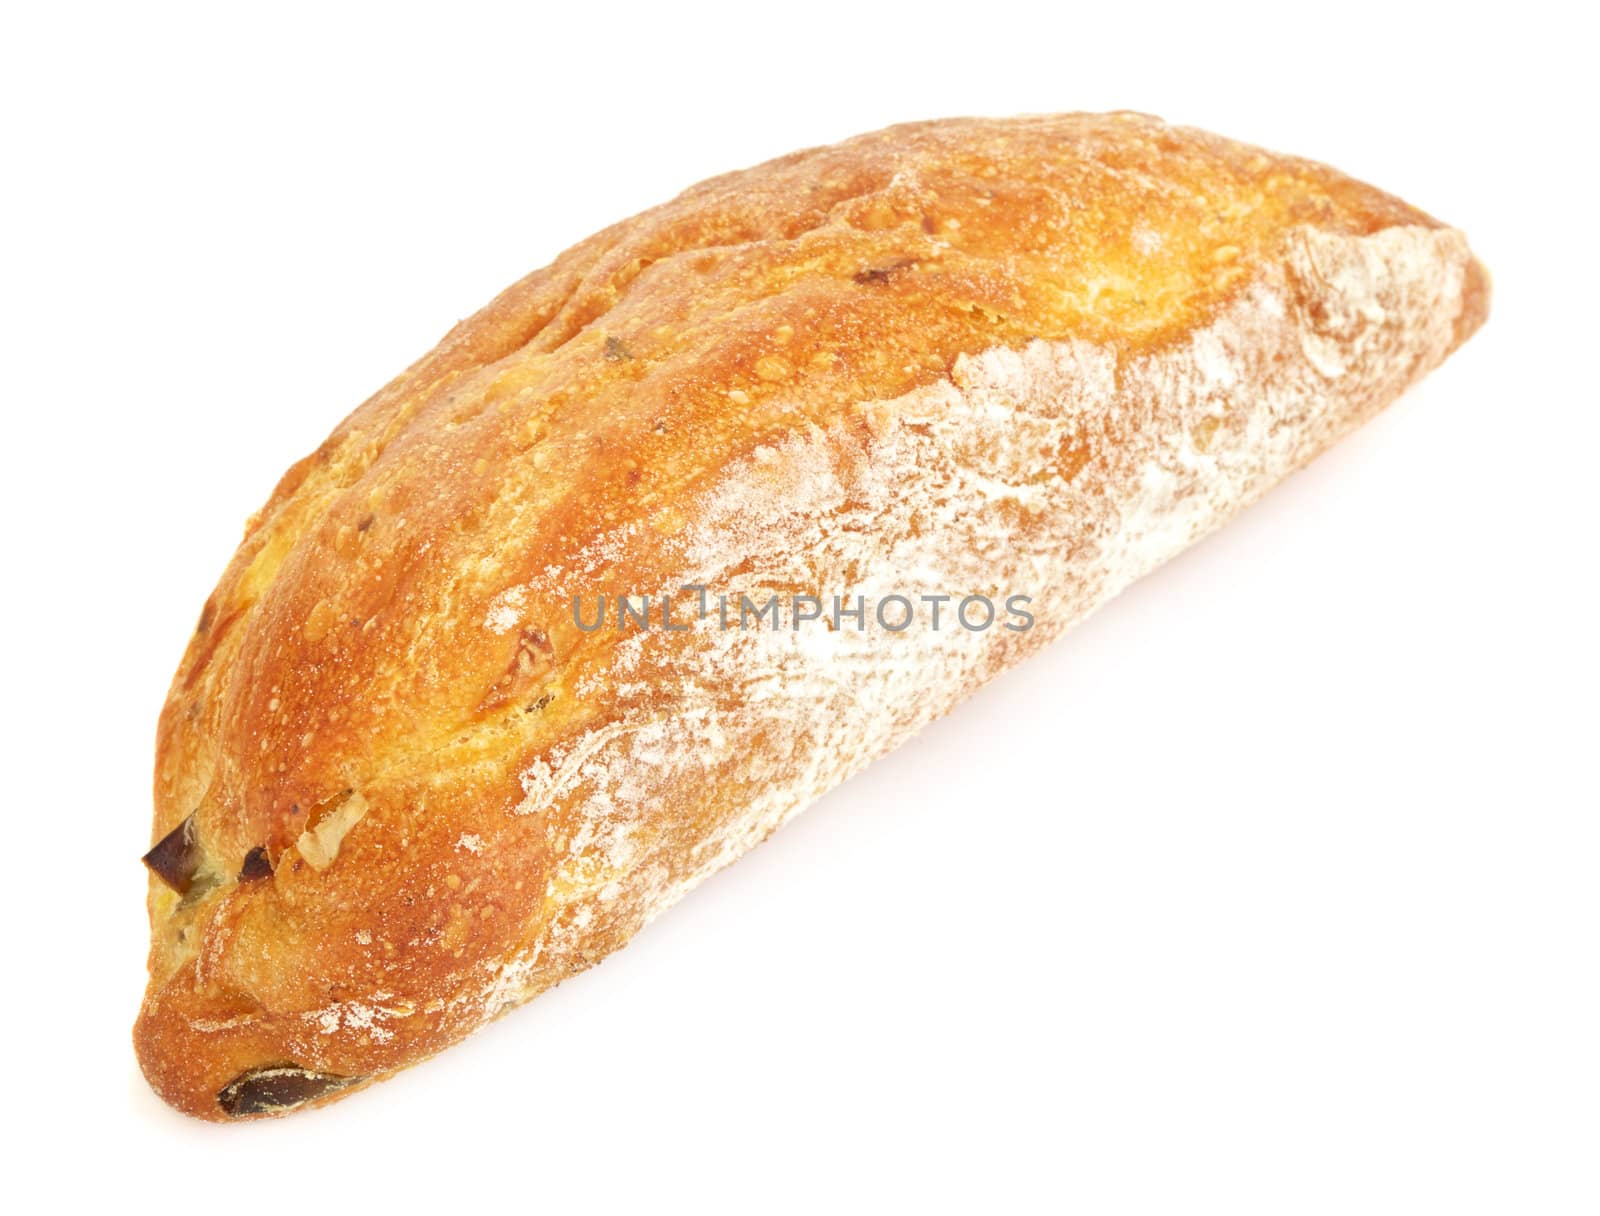 ciabatta (italian bread), isolated on white background